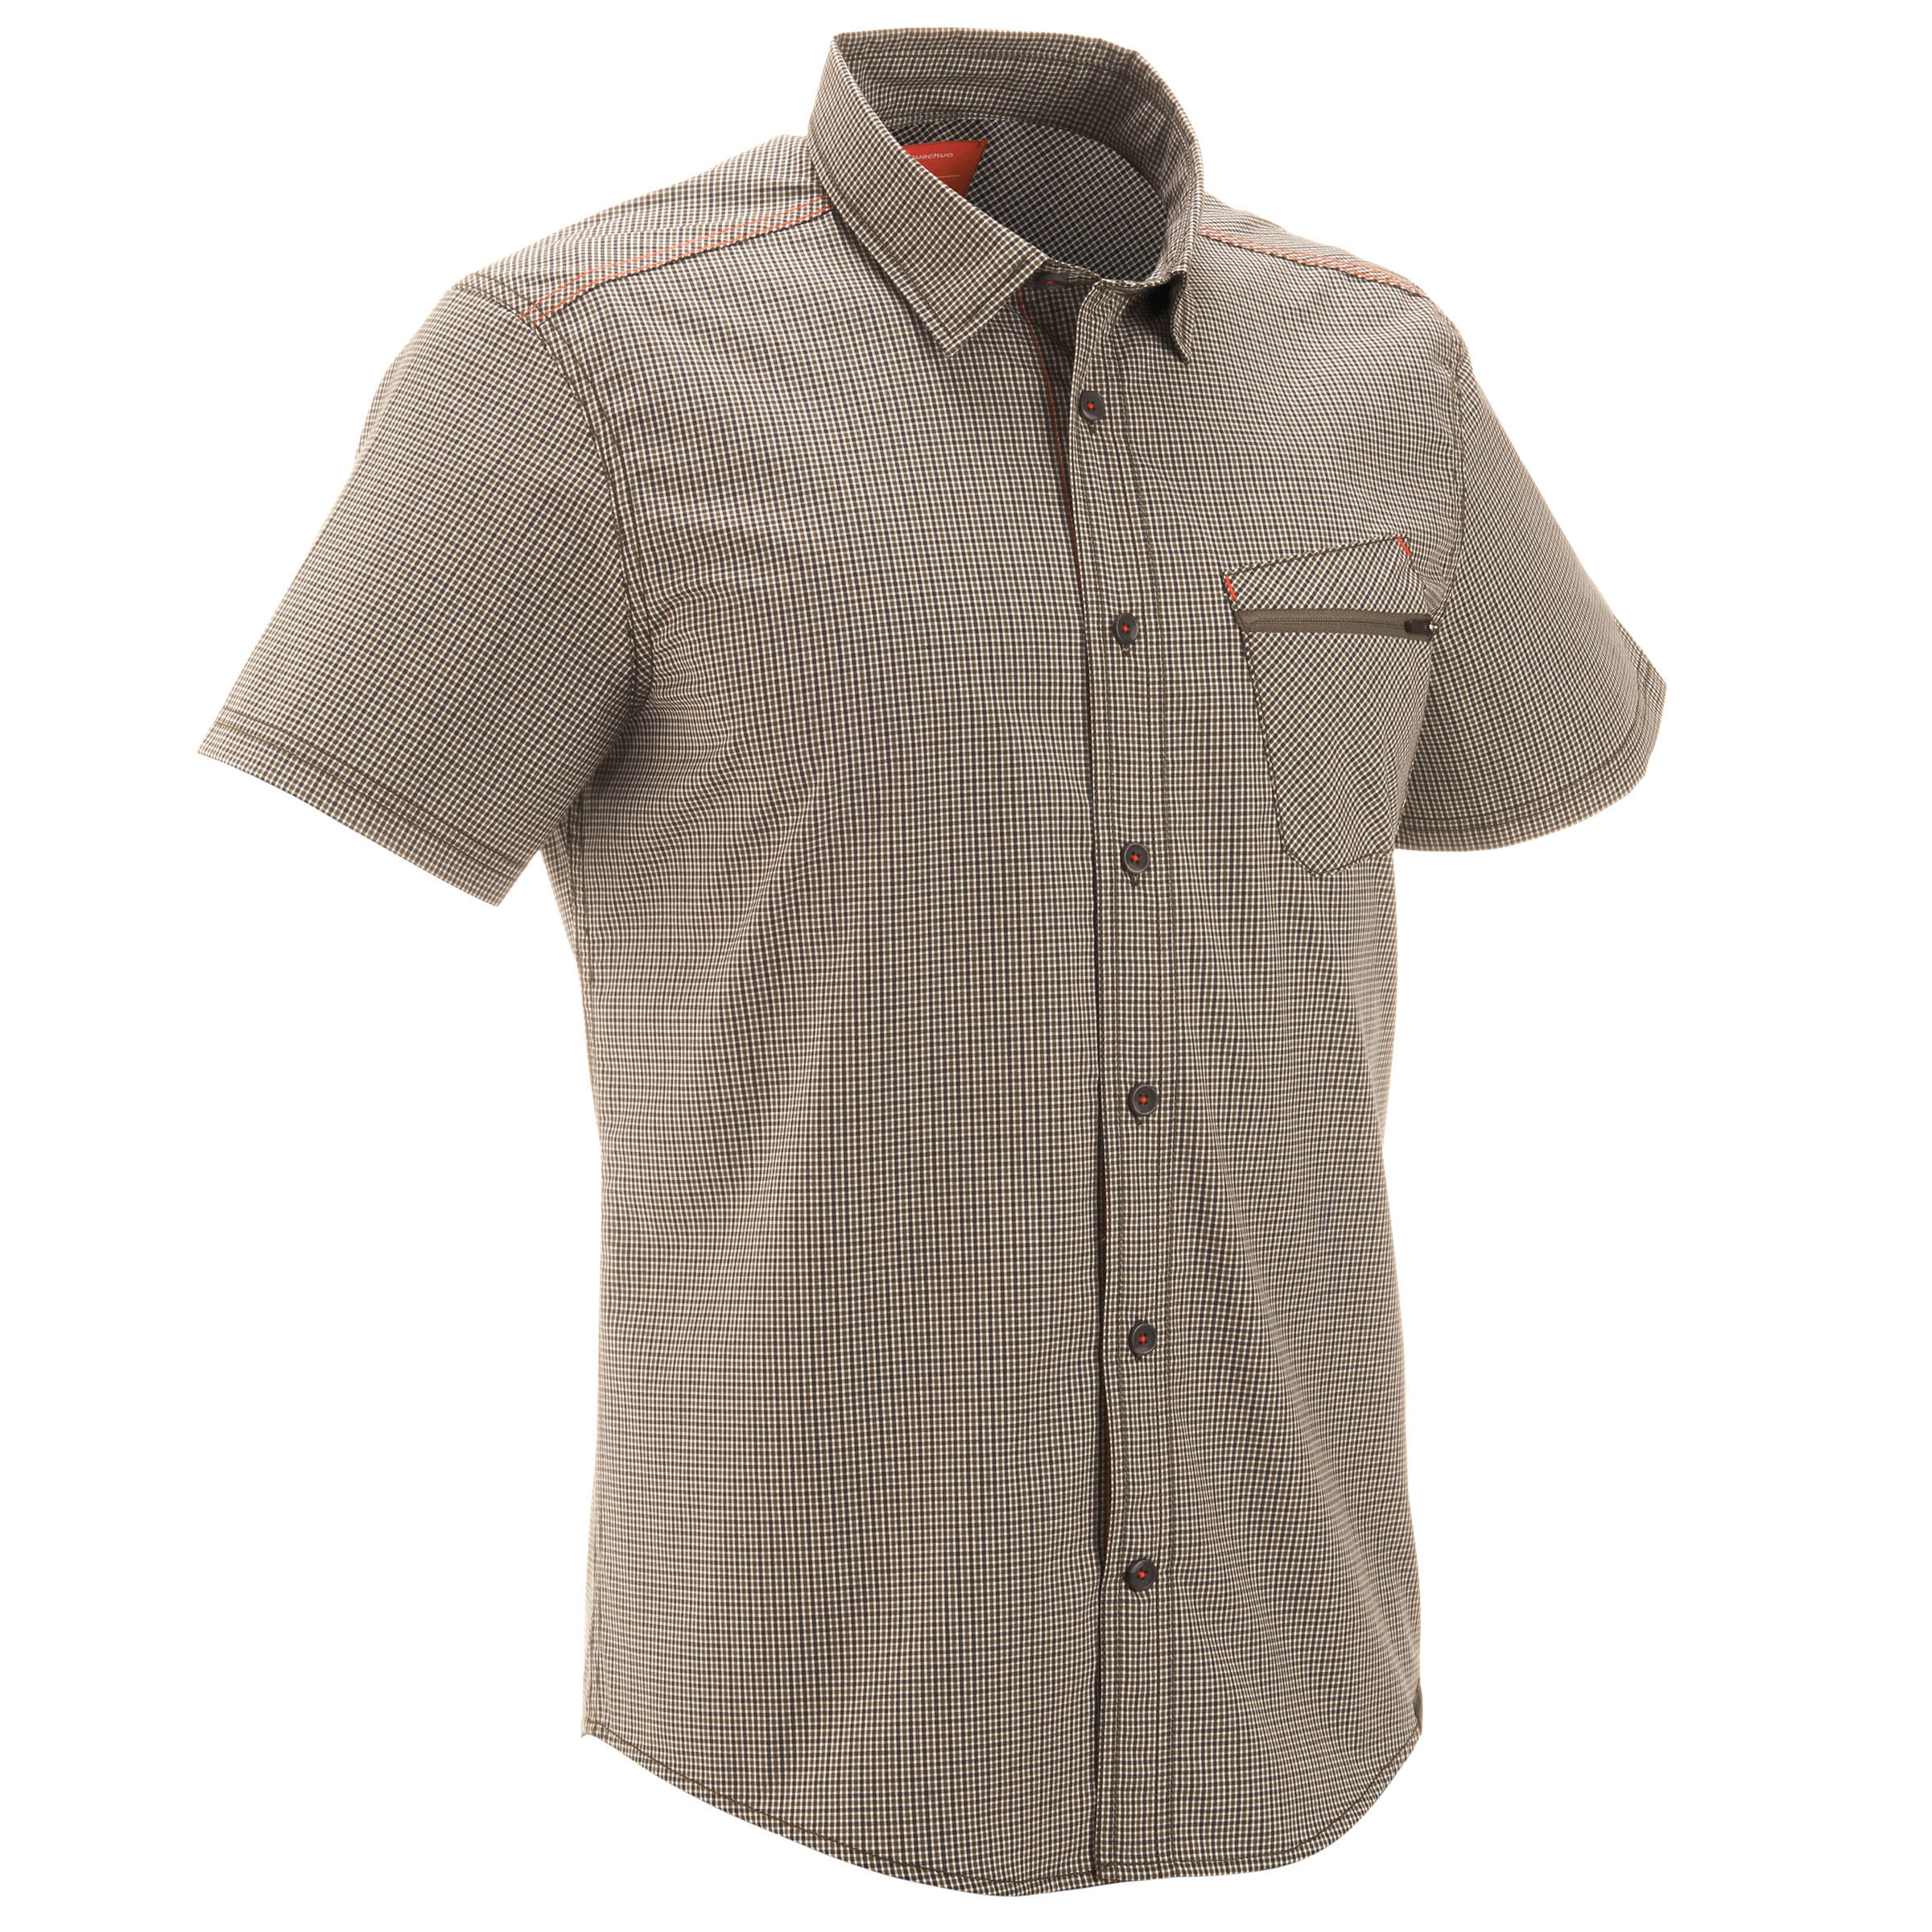 QUECHUA Arpenaz 100 Short-Sleeved Hiking Shirt - Khaki